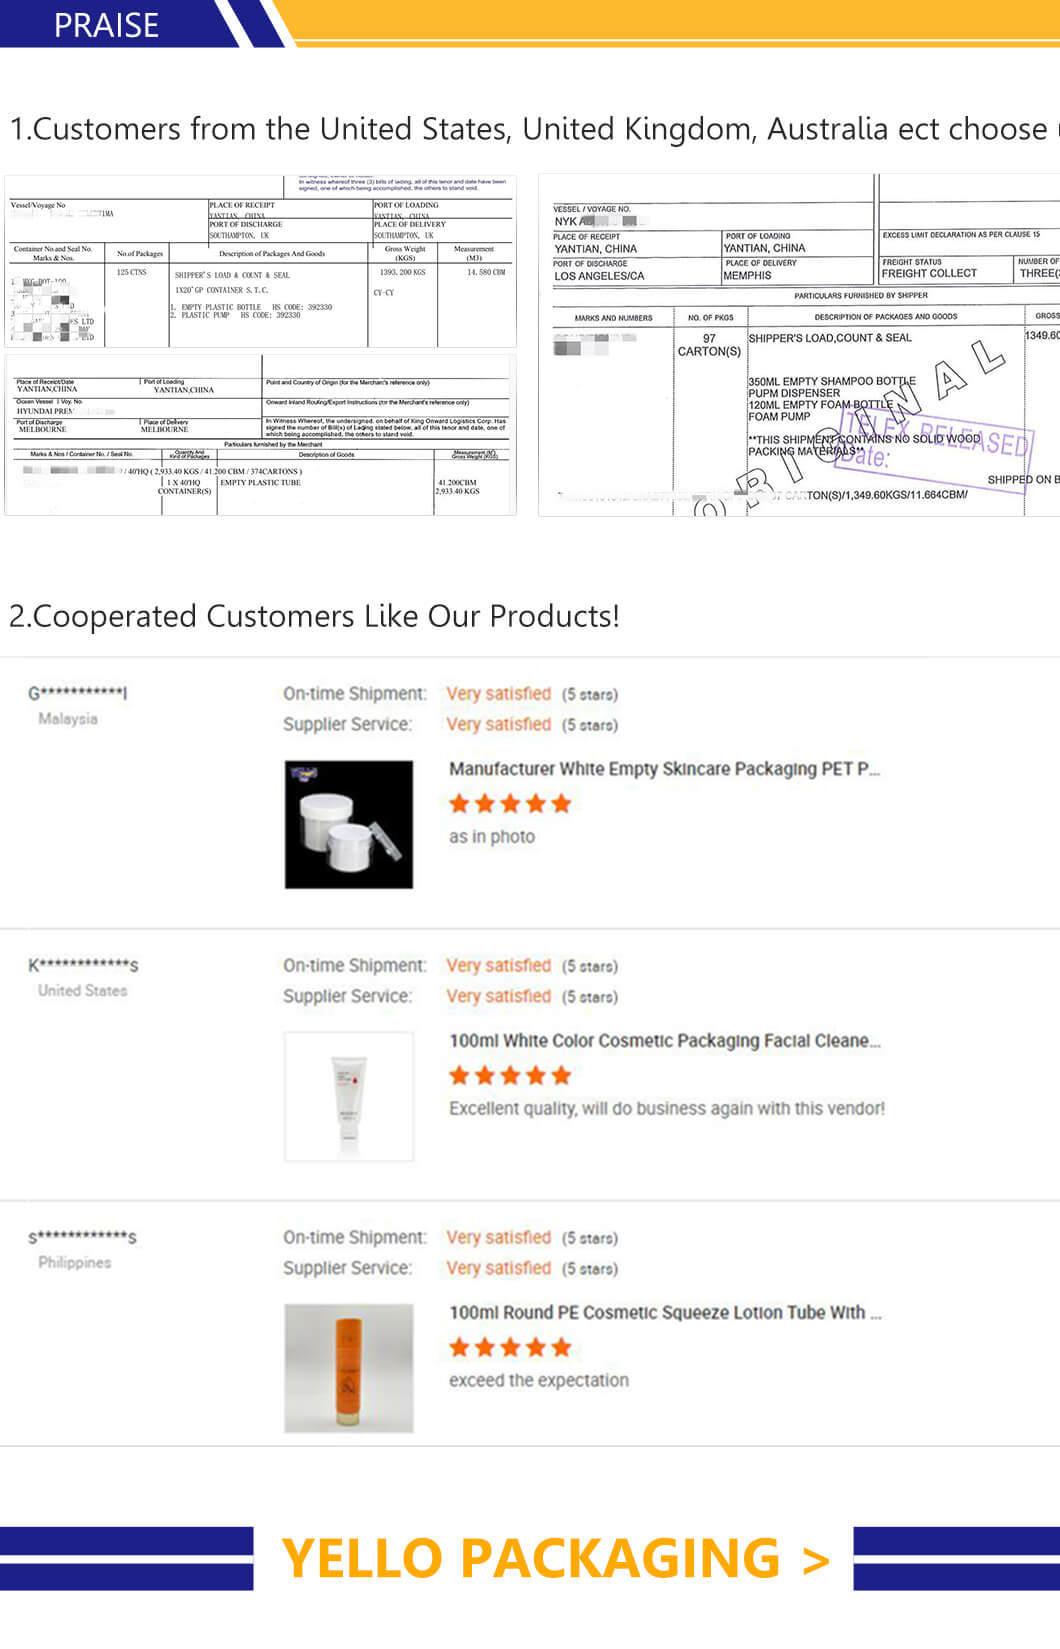 Custom Cosmetic Packaging Skincare 30g 50g 100g 200g 250g 500g Plastic Cream Jars with Spoon